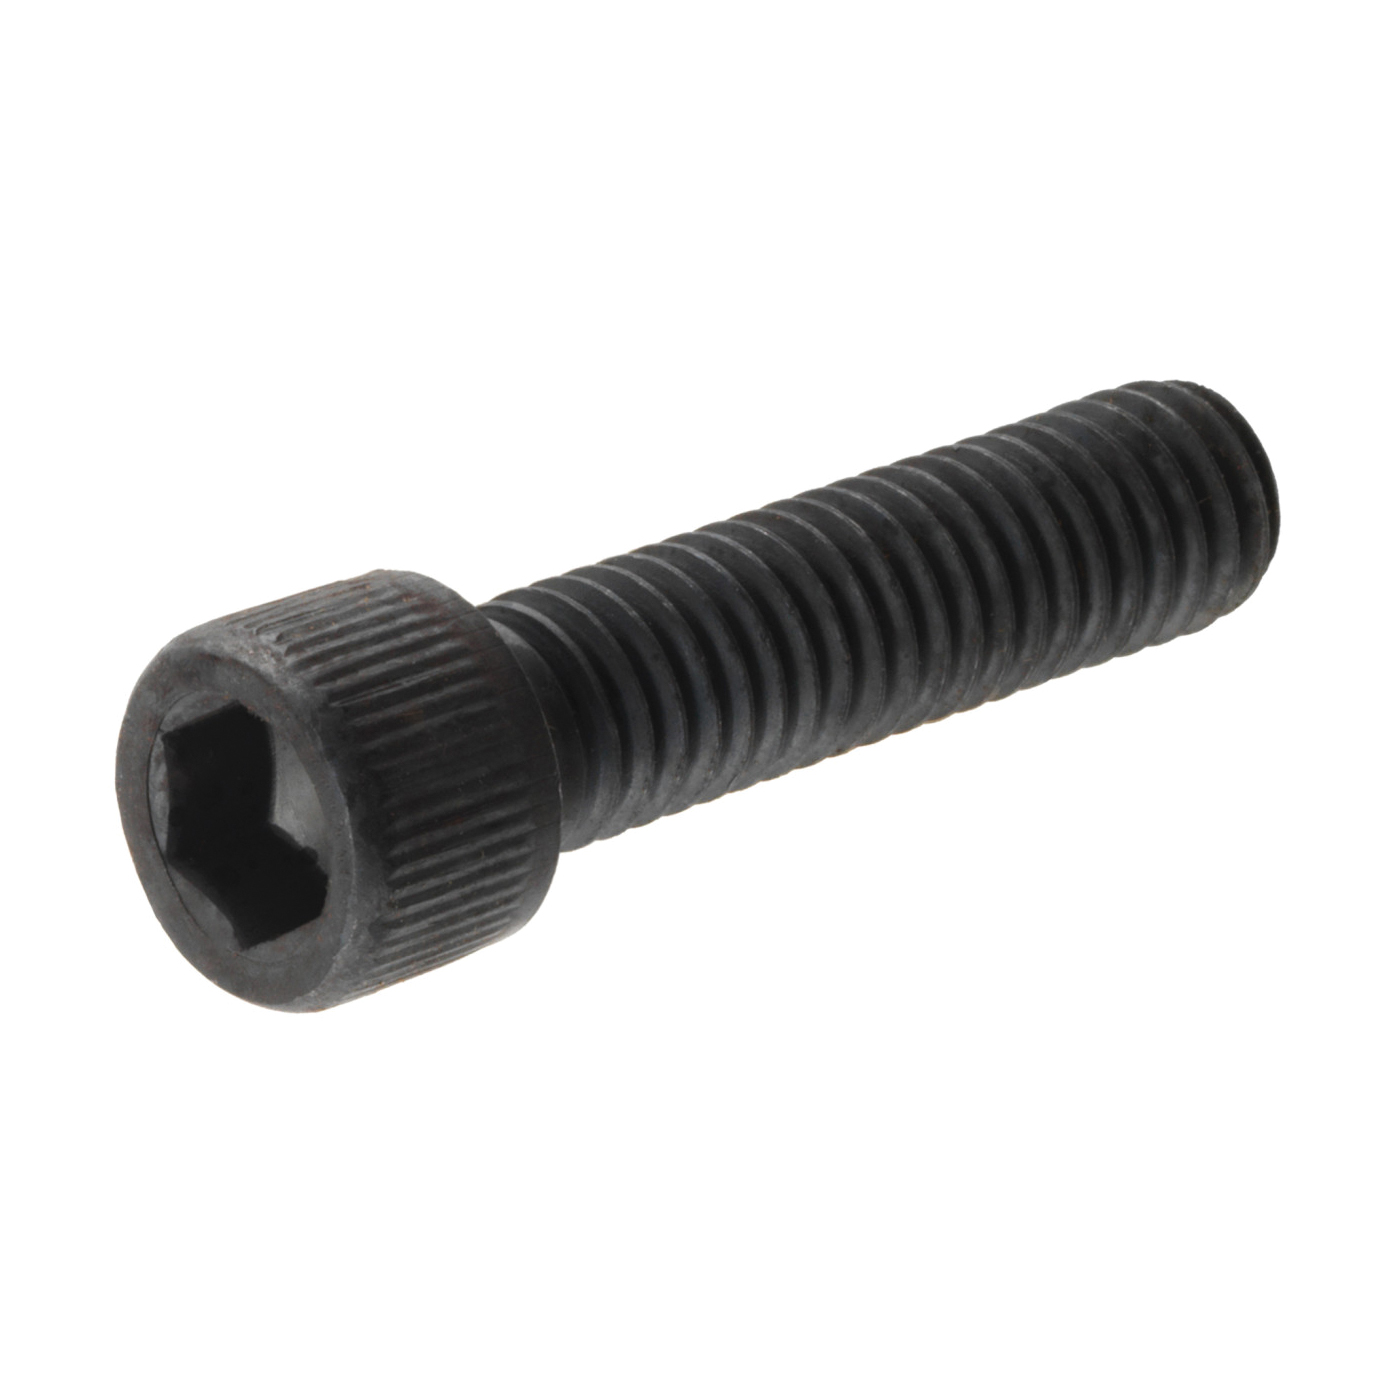 880321 Screw, 5/16-18 Thread, 1 in L, Coarse Thread, Socket Drive, Blunt Point, Steel, Black Phosphate, 2 PK